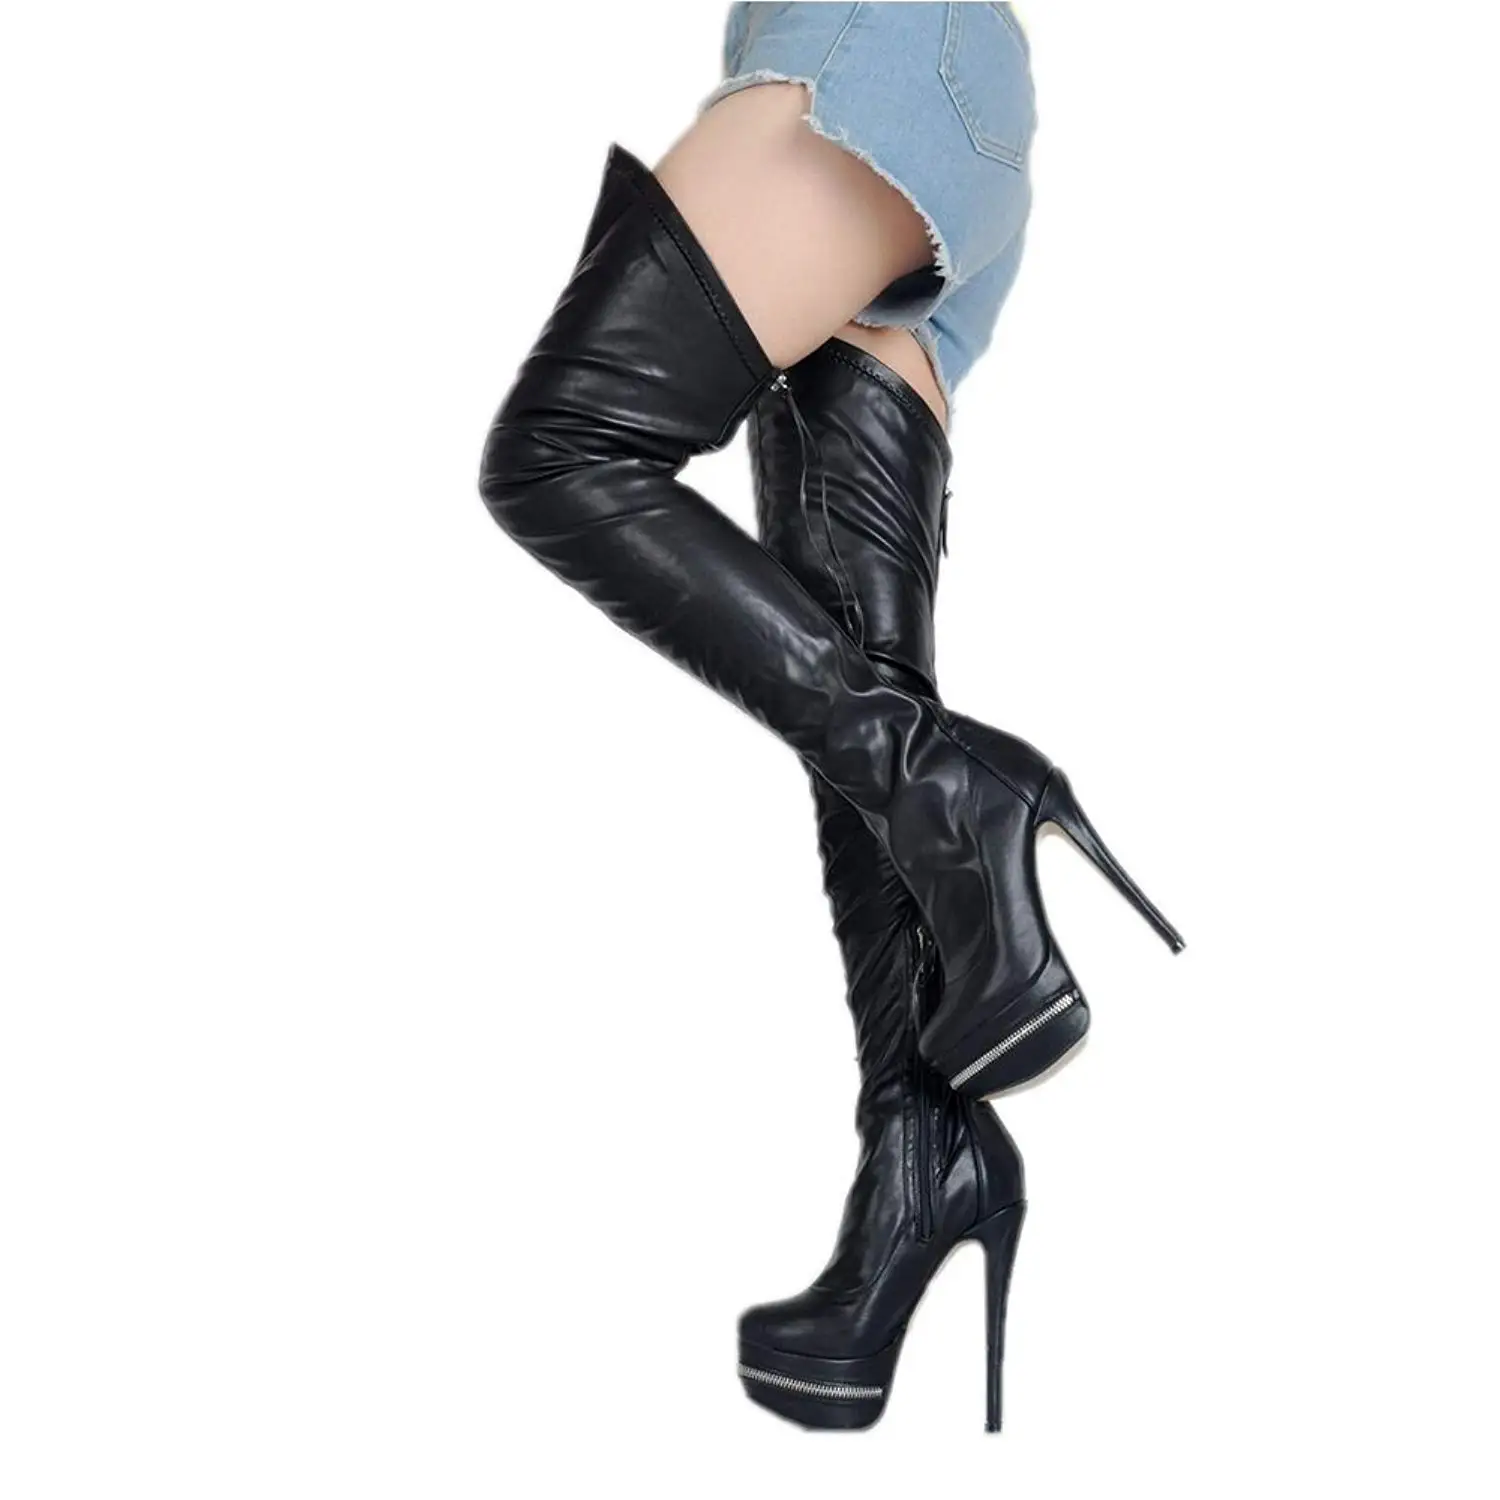 black thigh high boots 3 inch heel